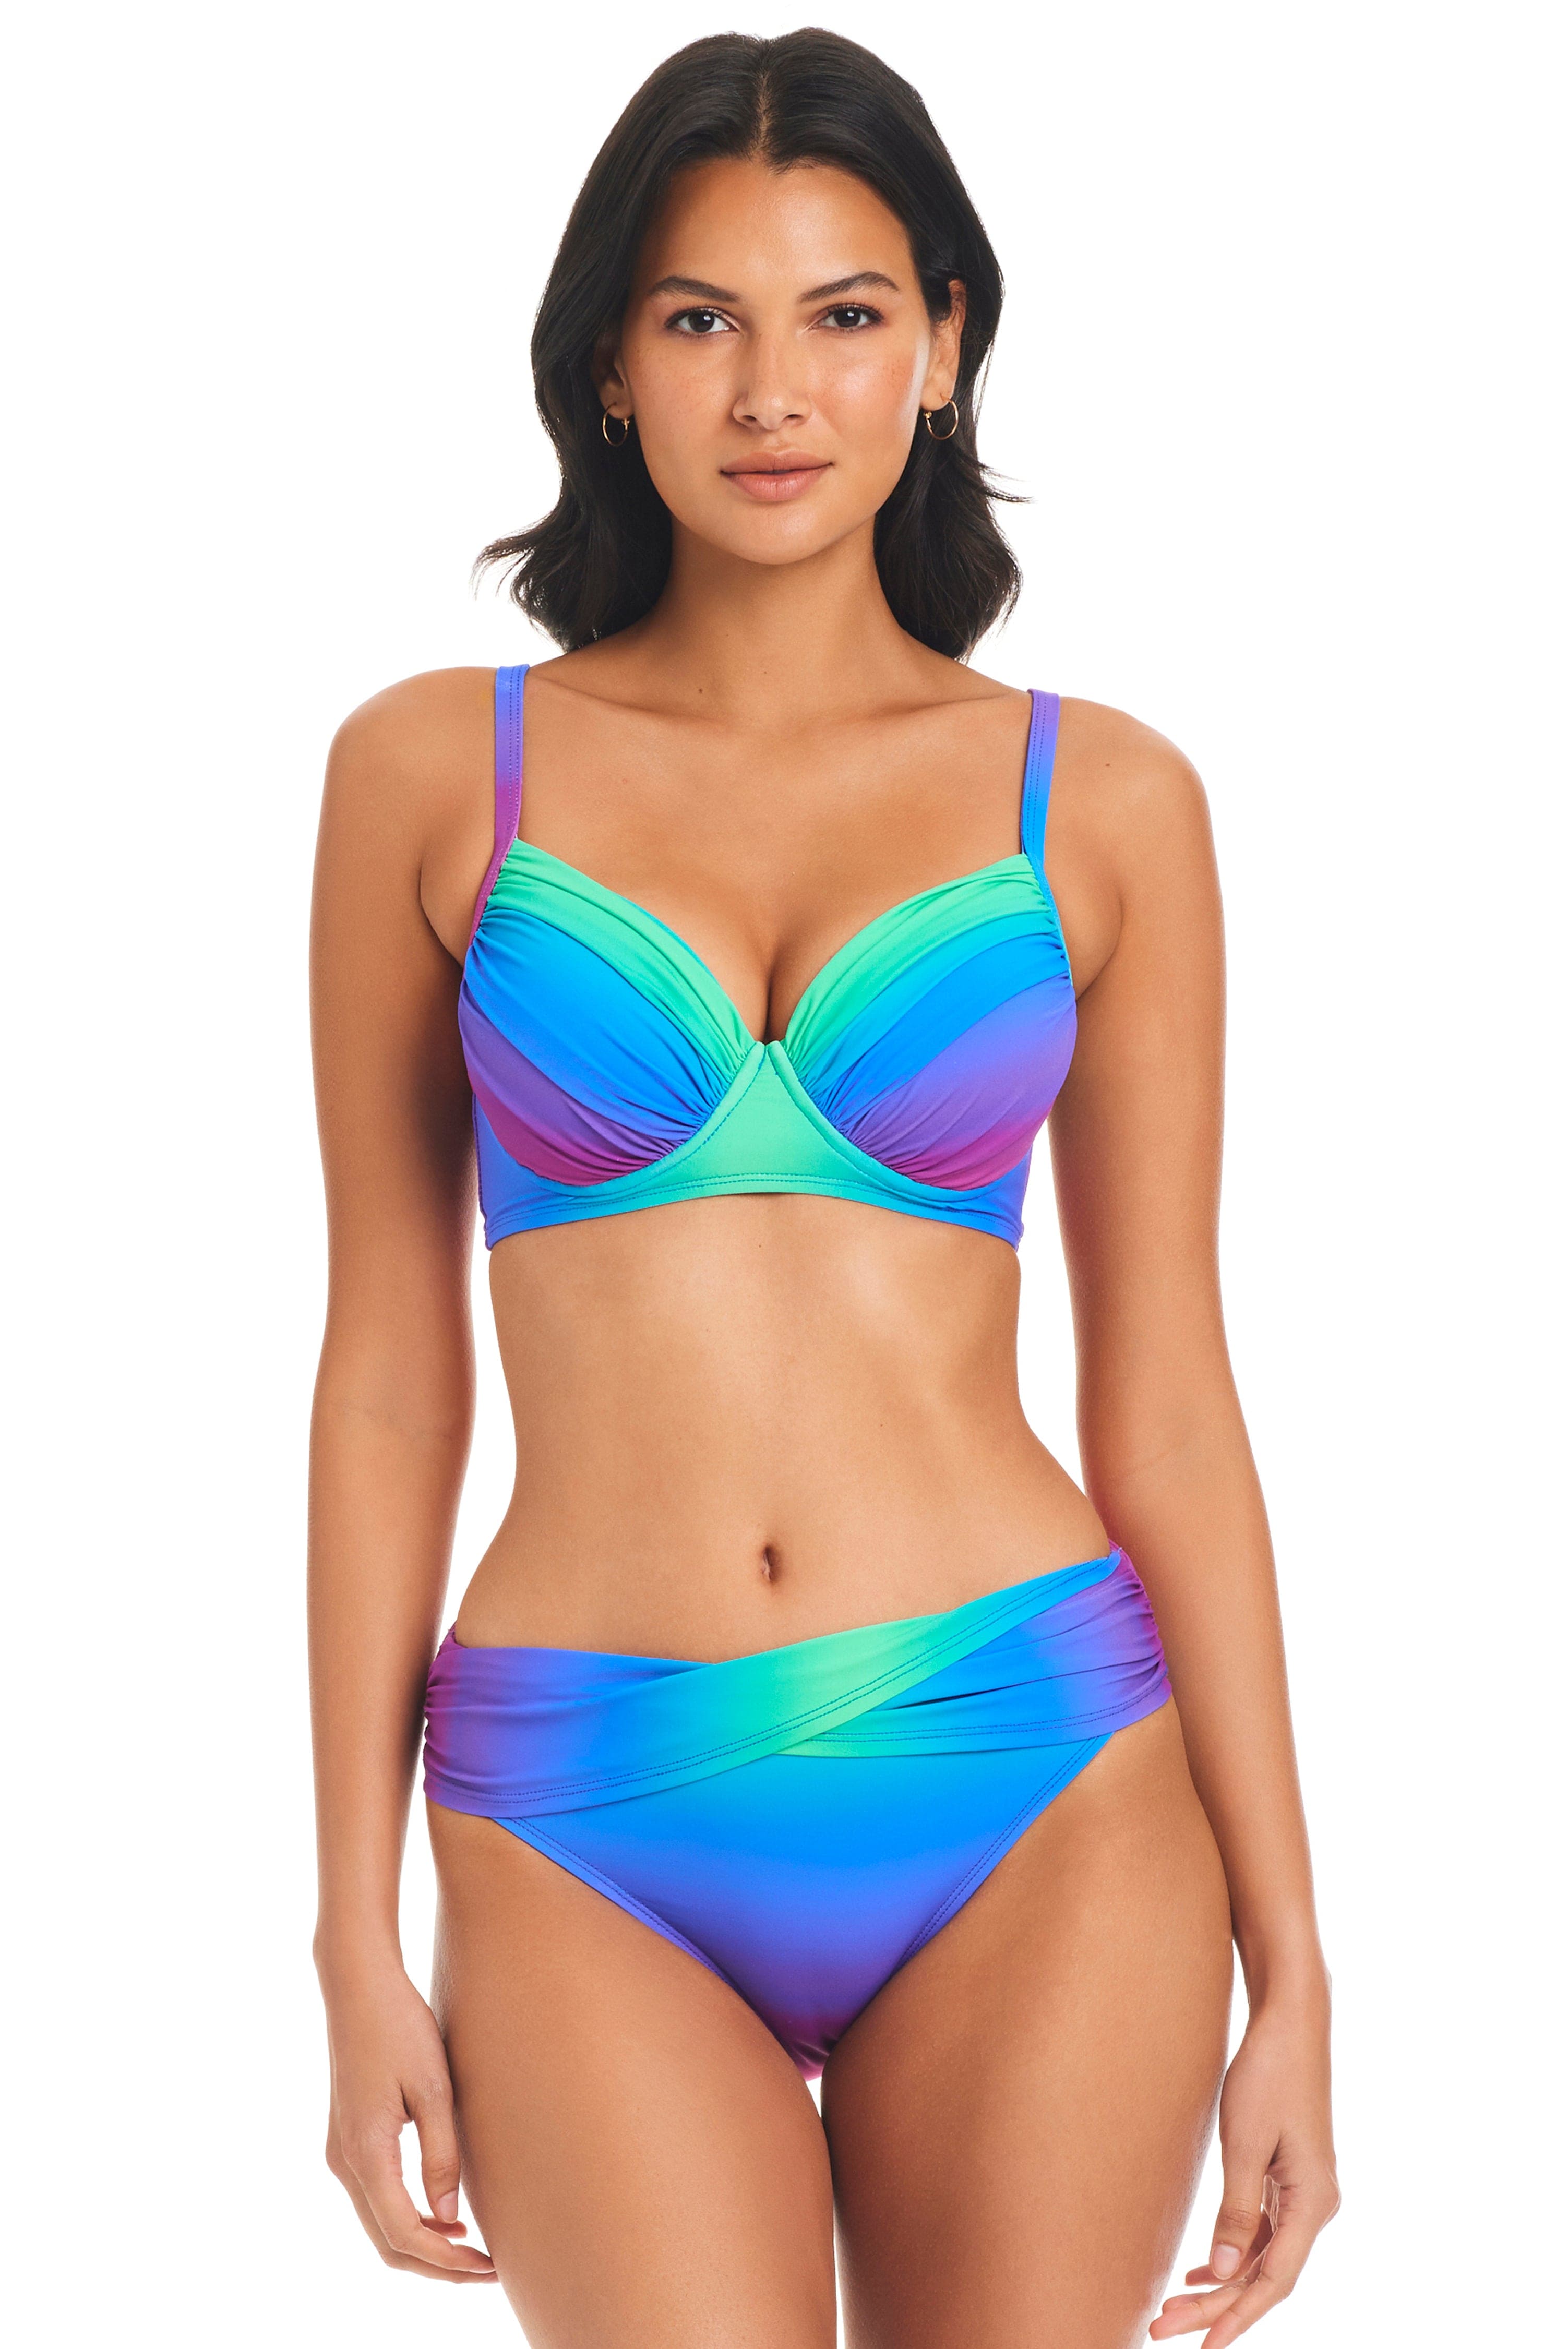 Bleu Rod Beattie Over The Shoulder Underwire Bra W/Molded Cup Bikini Top,  from Sun, Sea and Sand, Size 36DD